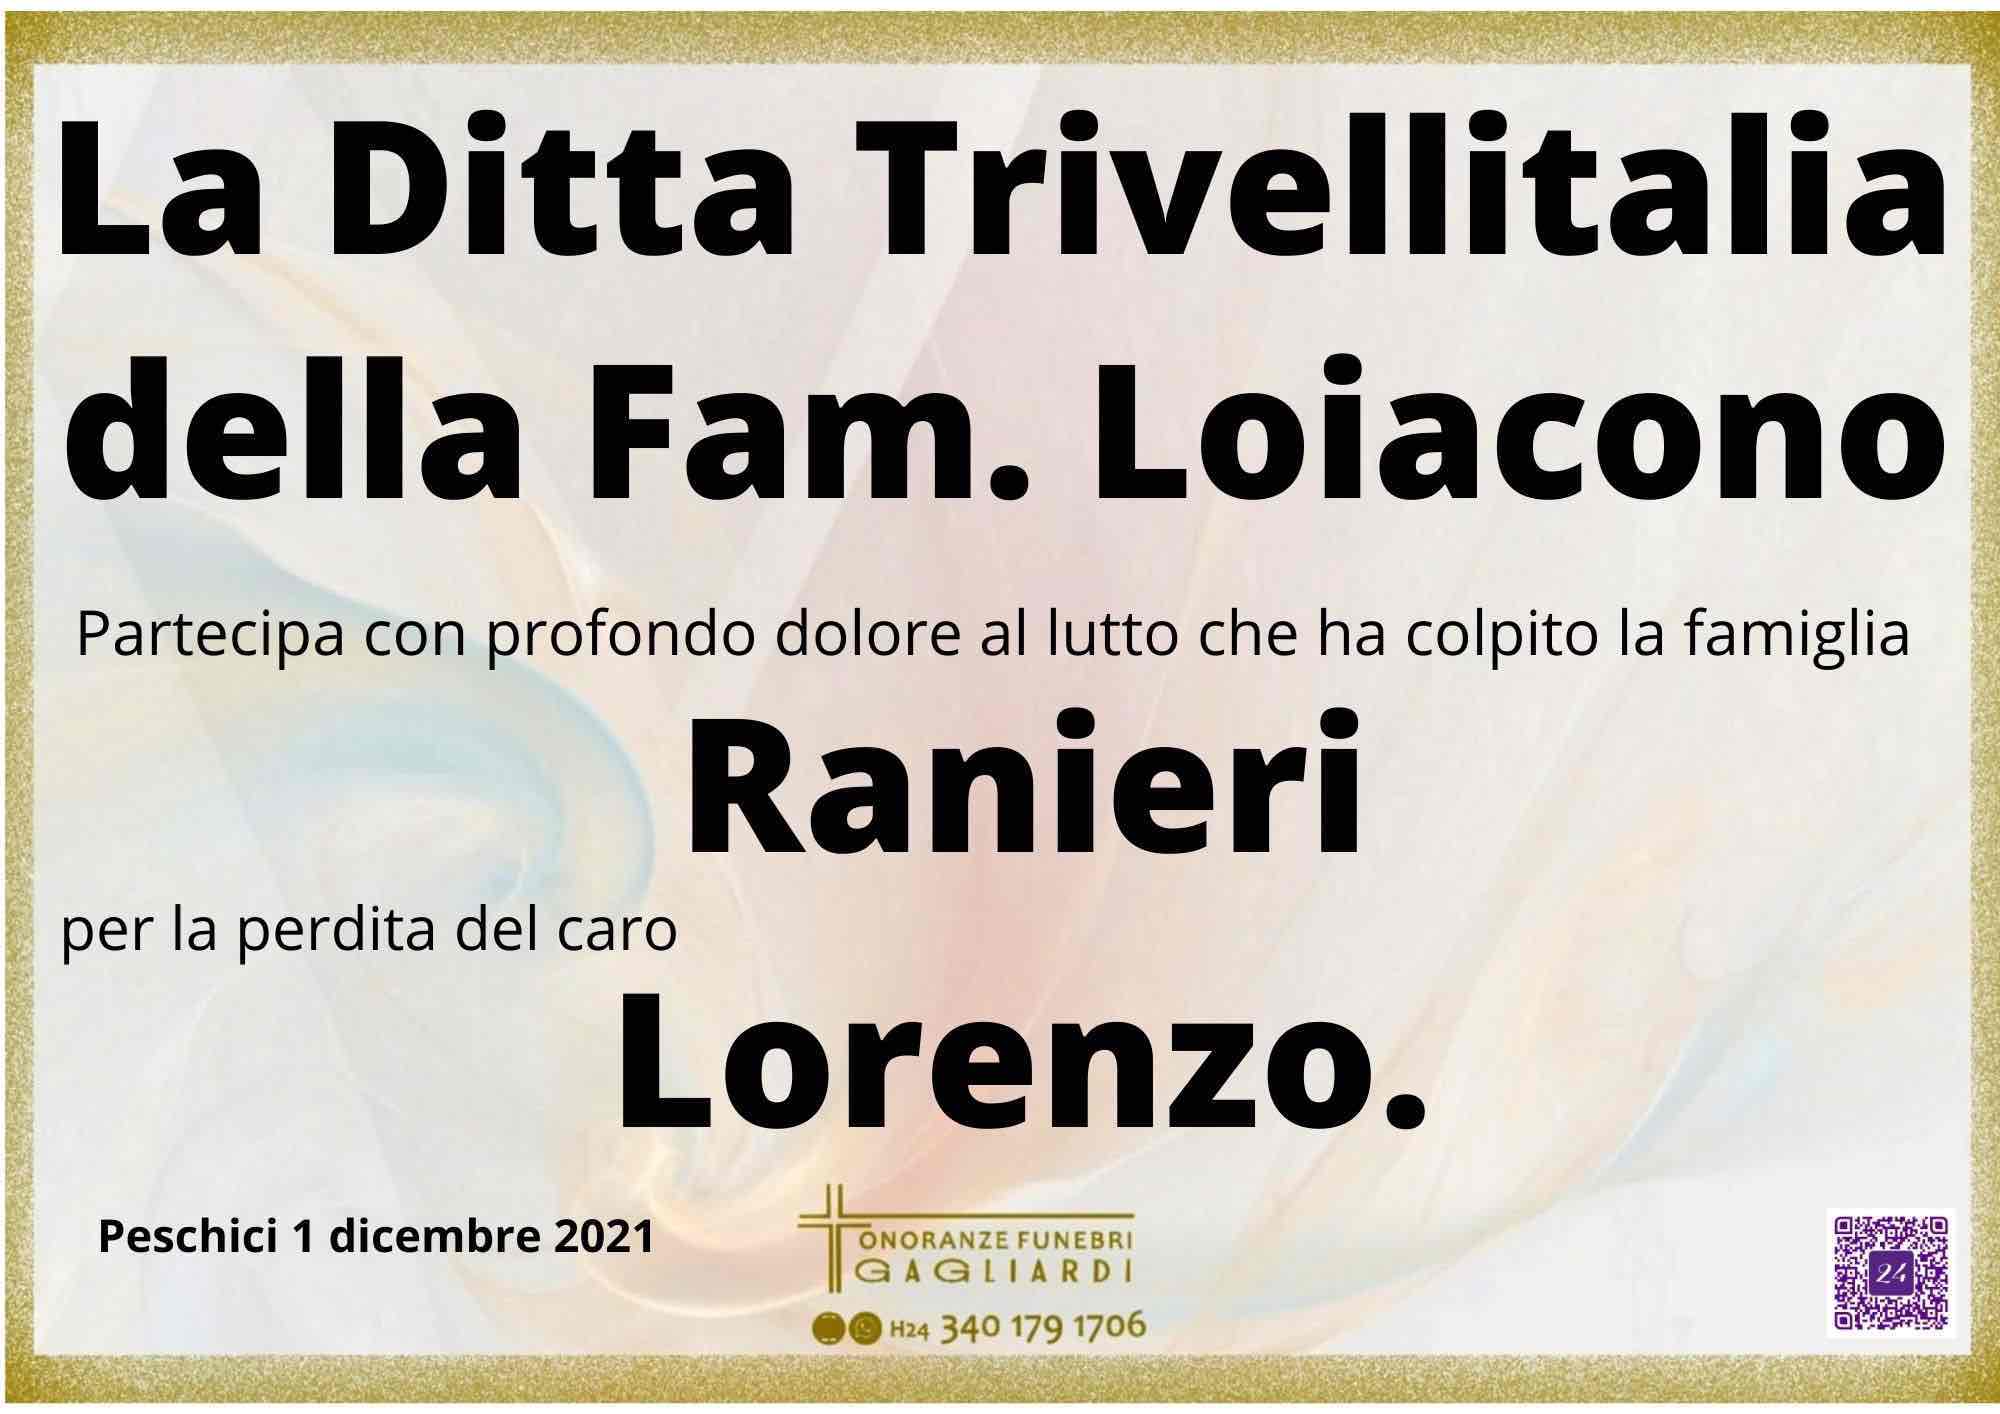 Lorenzo Ranieri